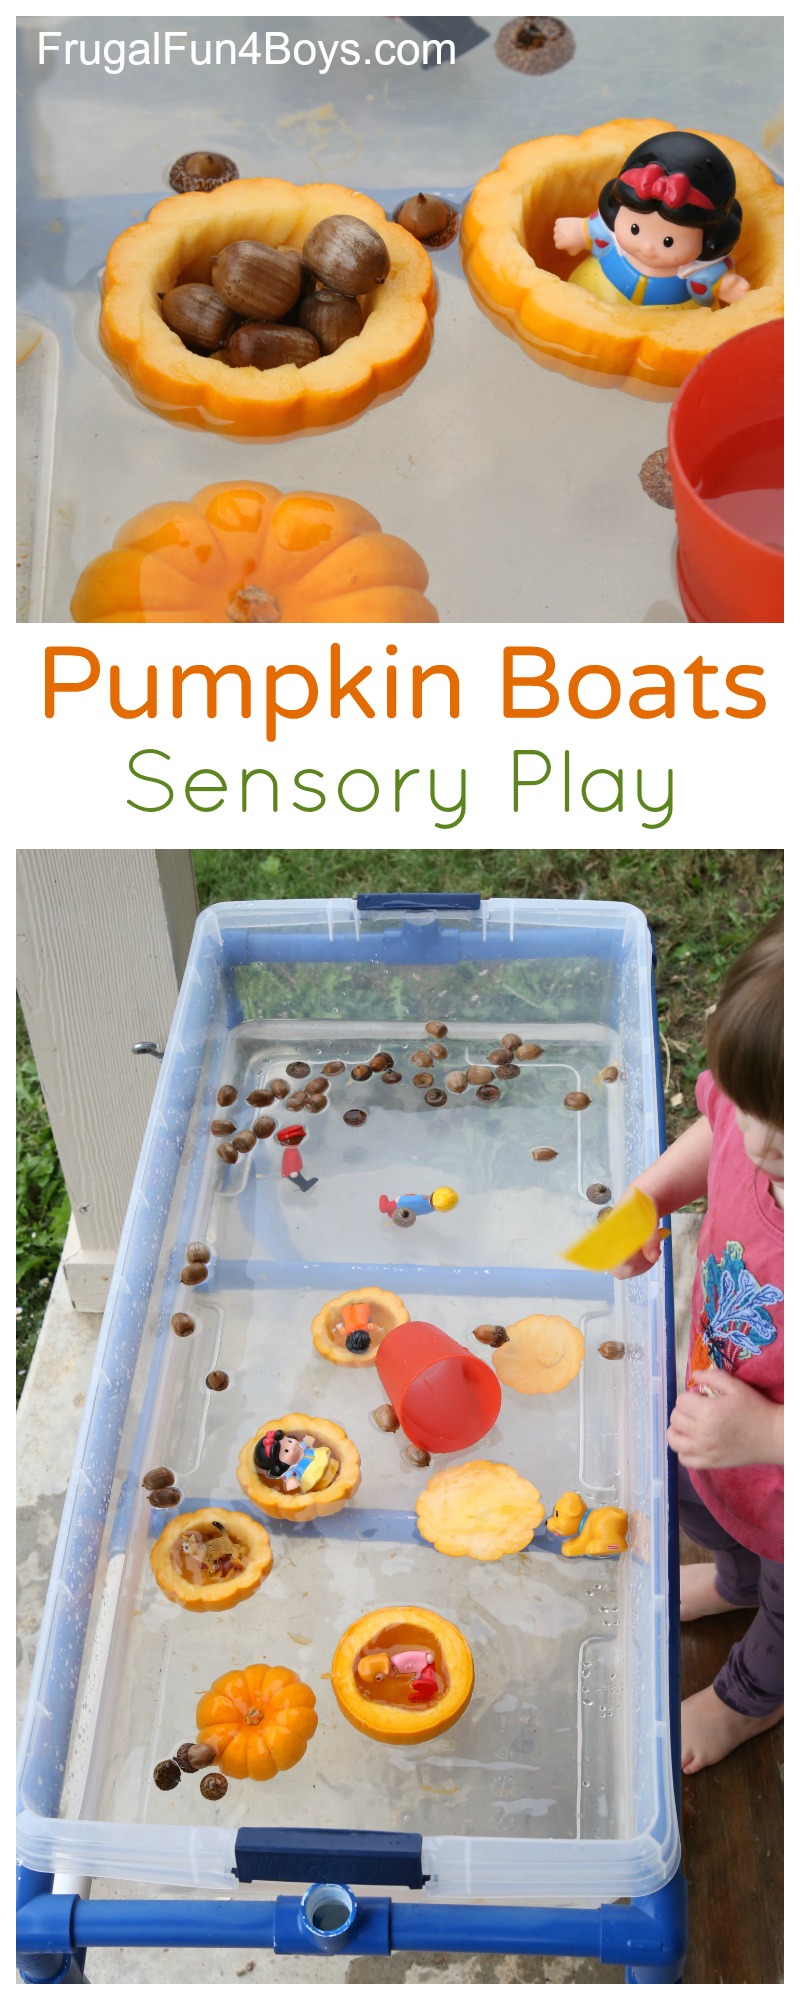 Pumpkin Boats Fall Sensory Play